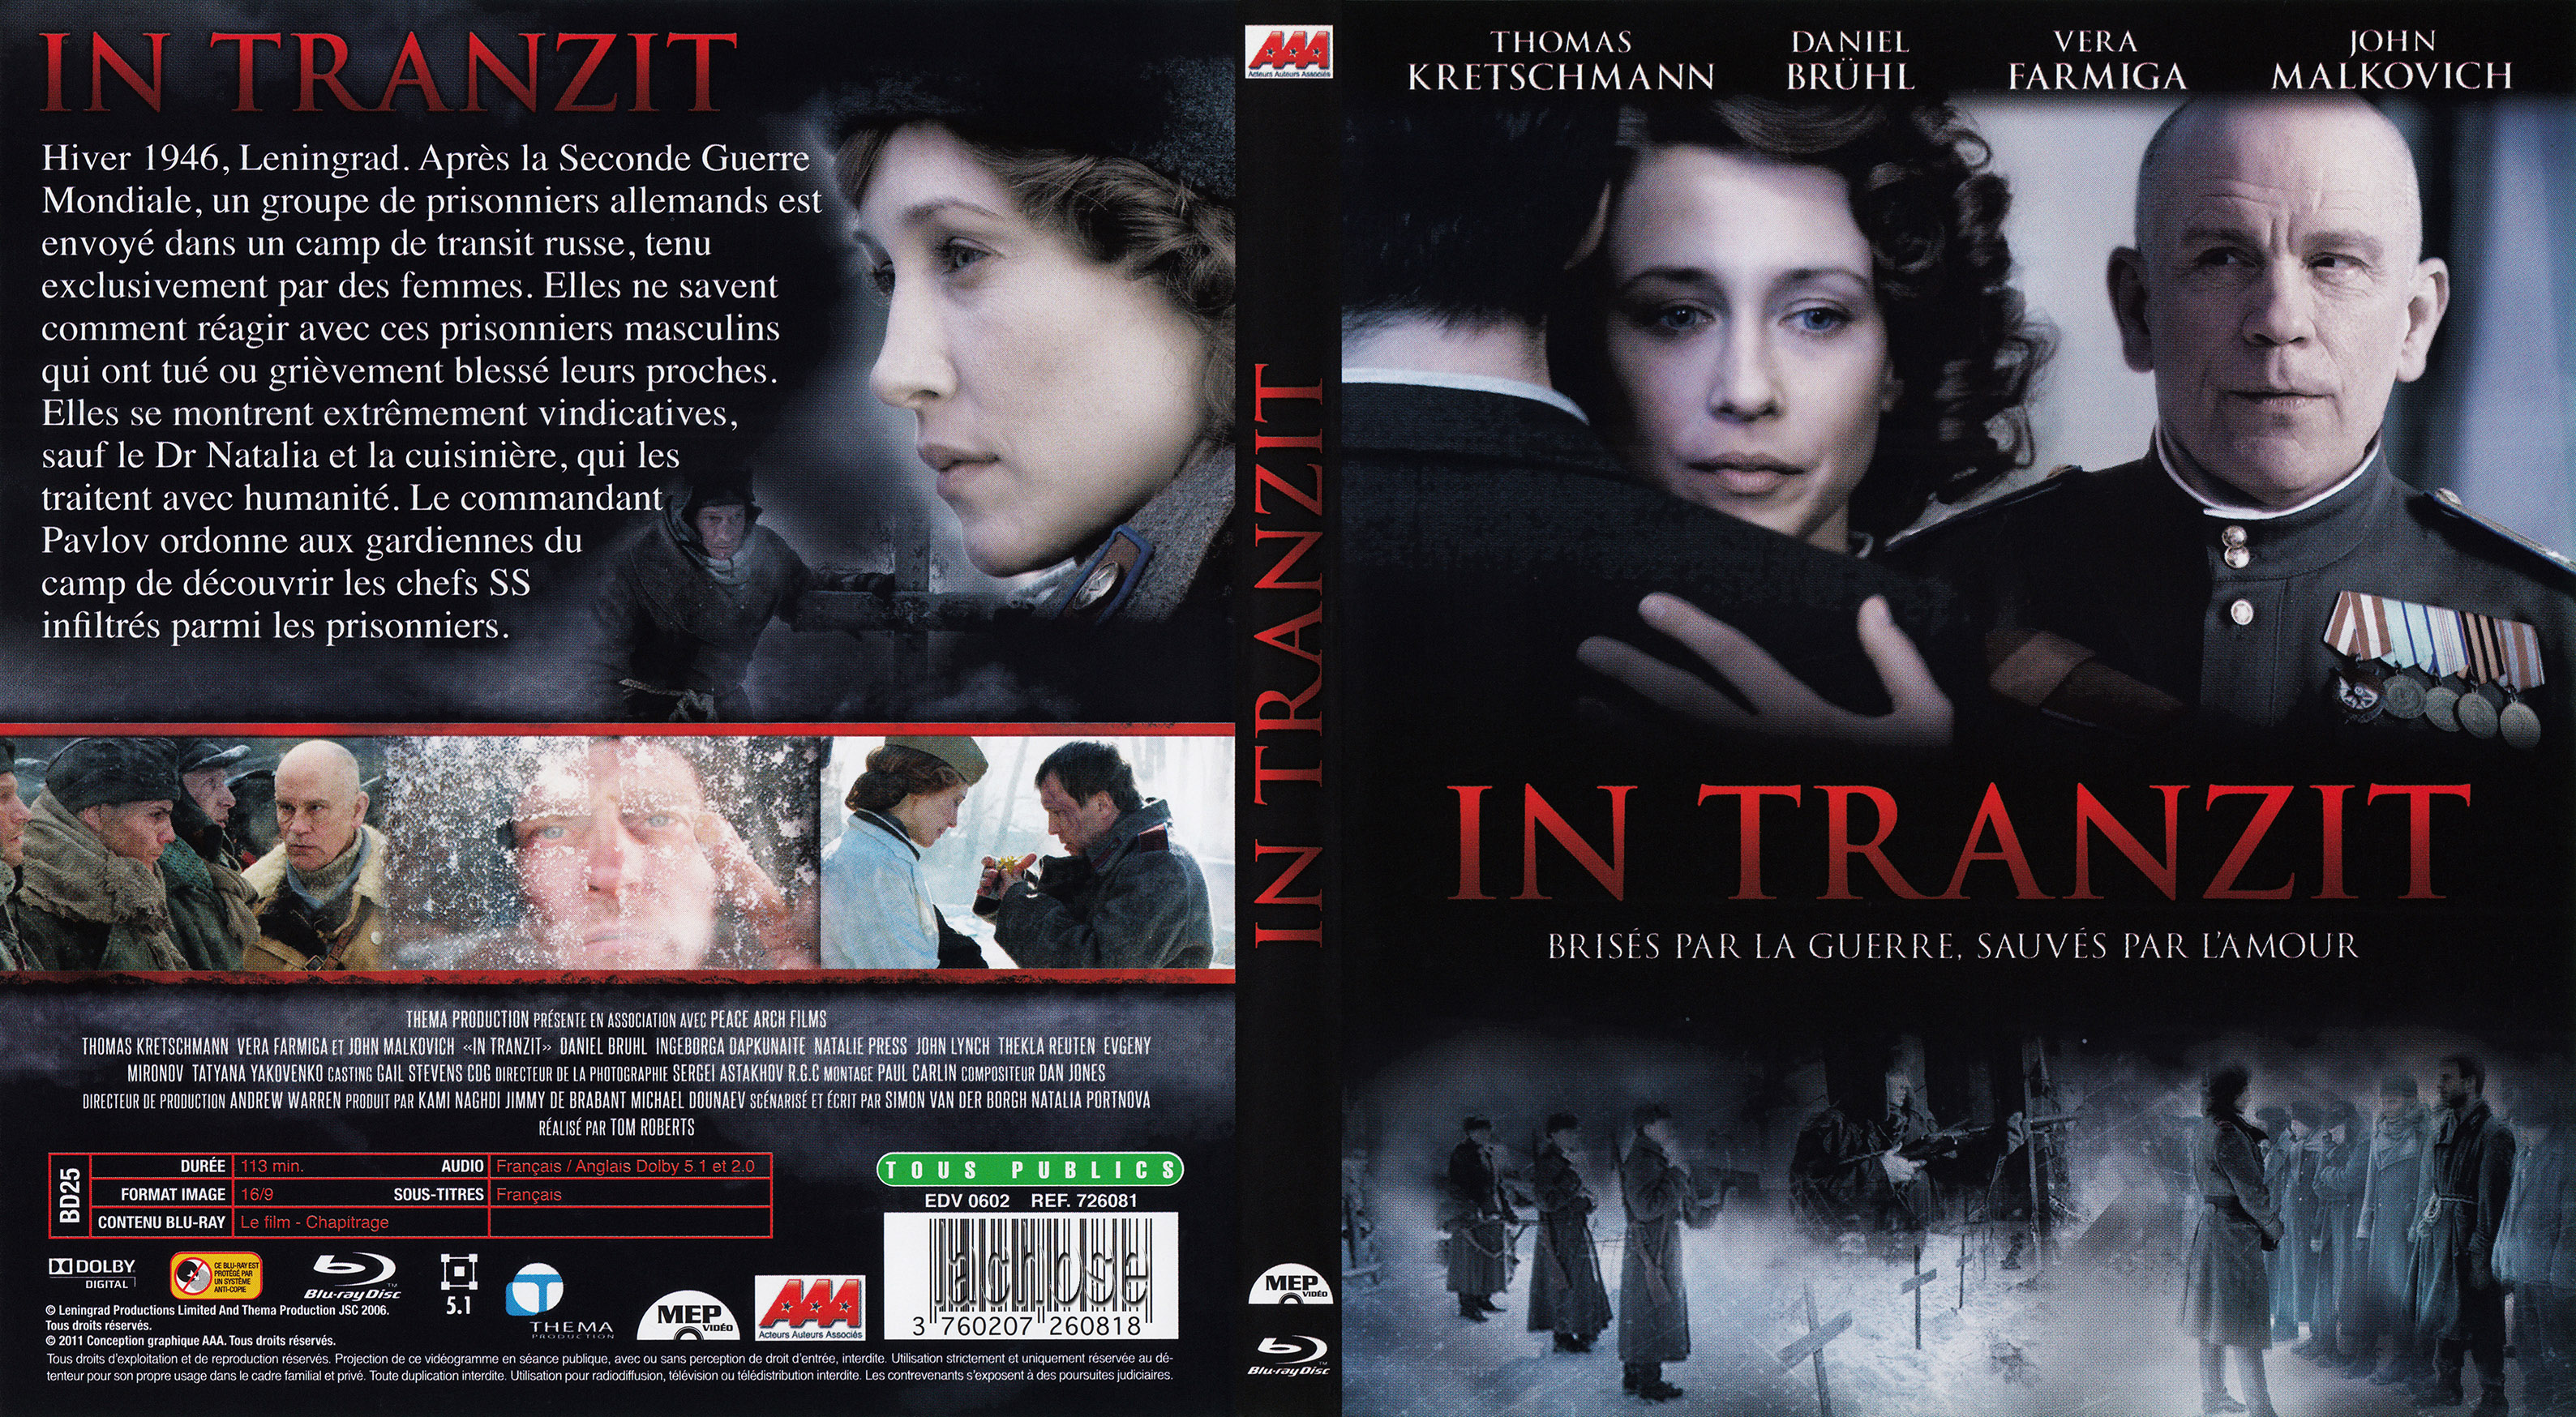 Jaquette DVD In tranzit (BLU-RAY)